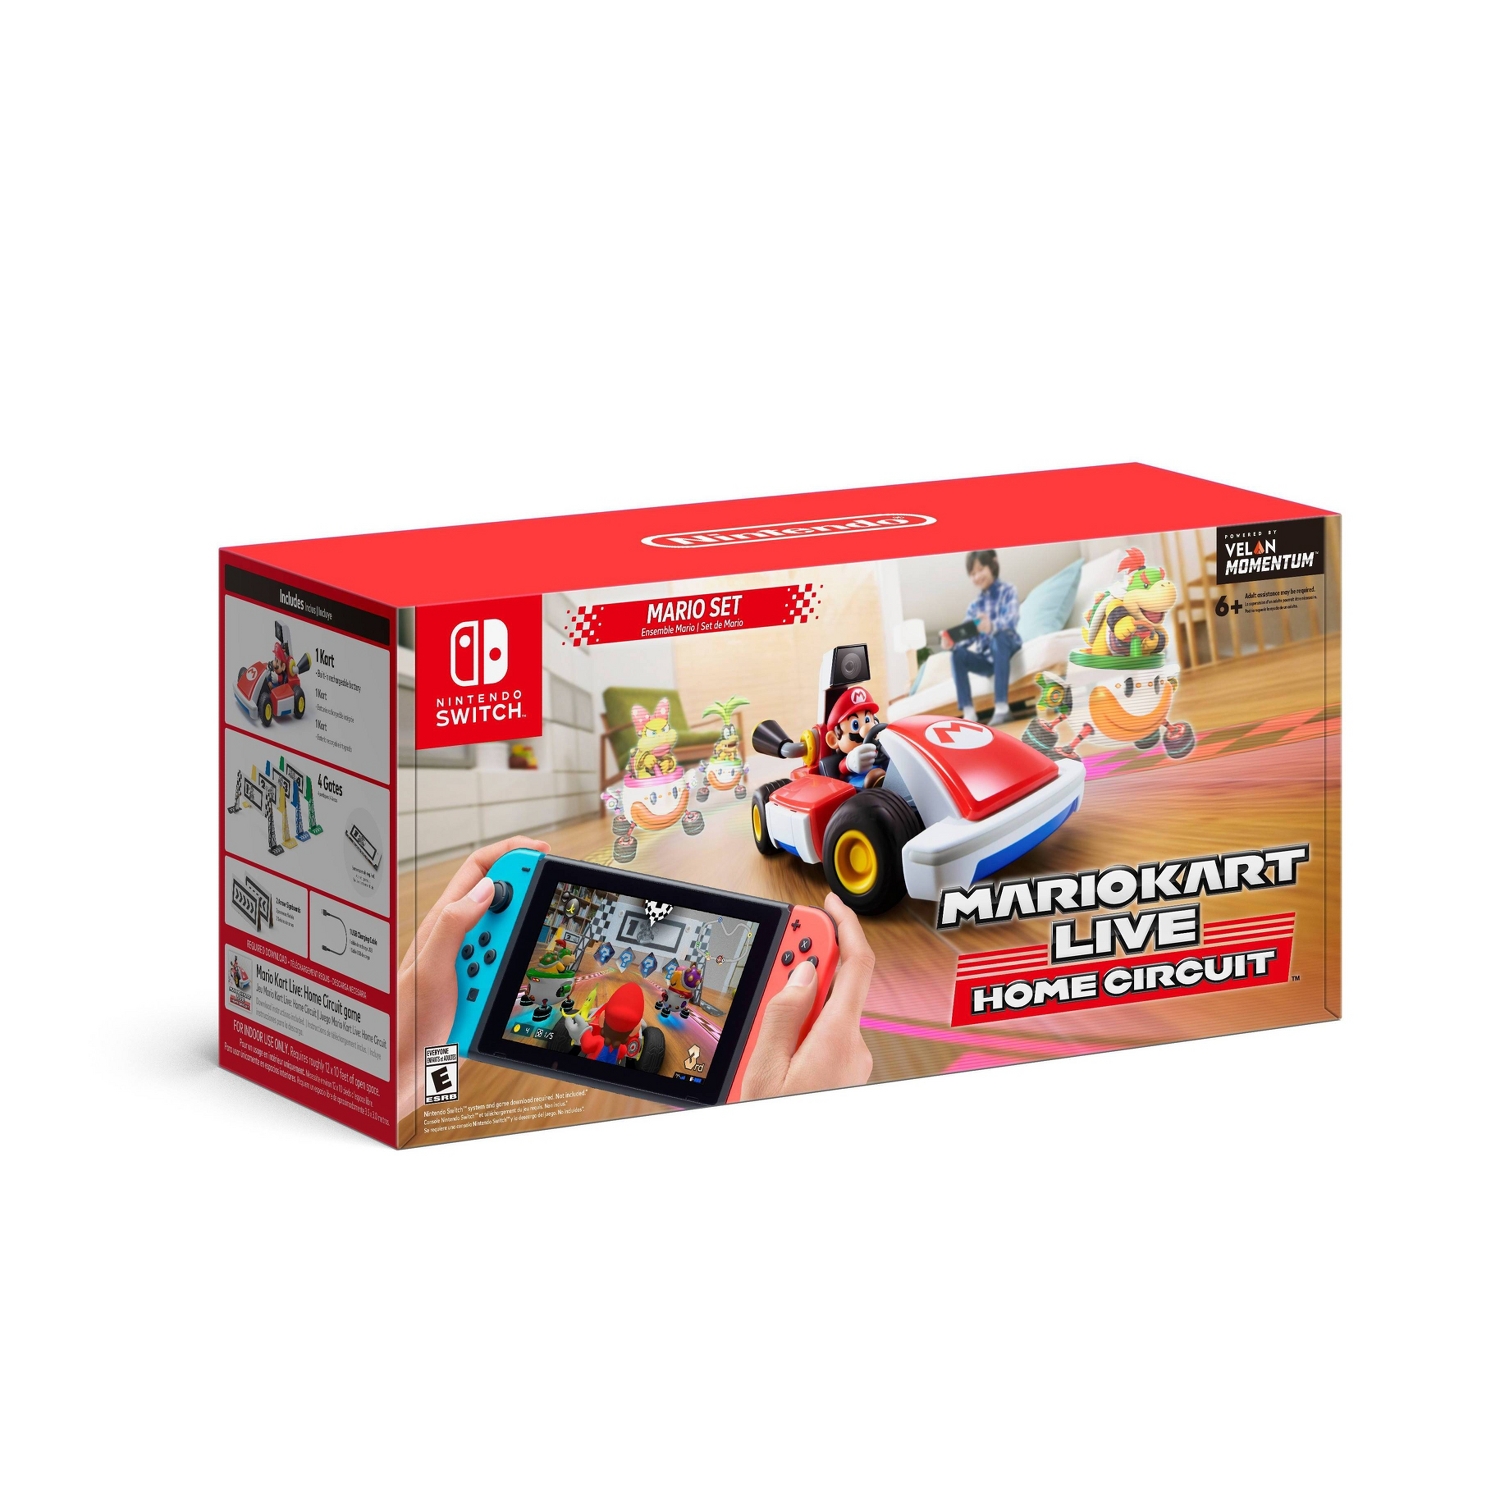 Mario Kart Live: Home Circuit - Mario Set : Target $59.99